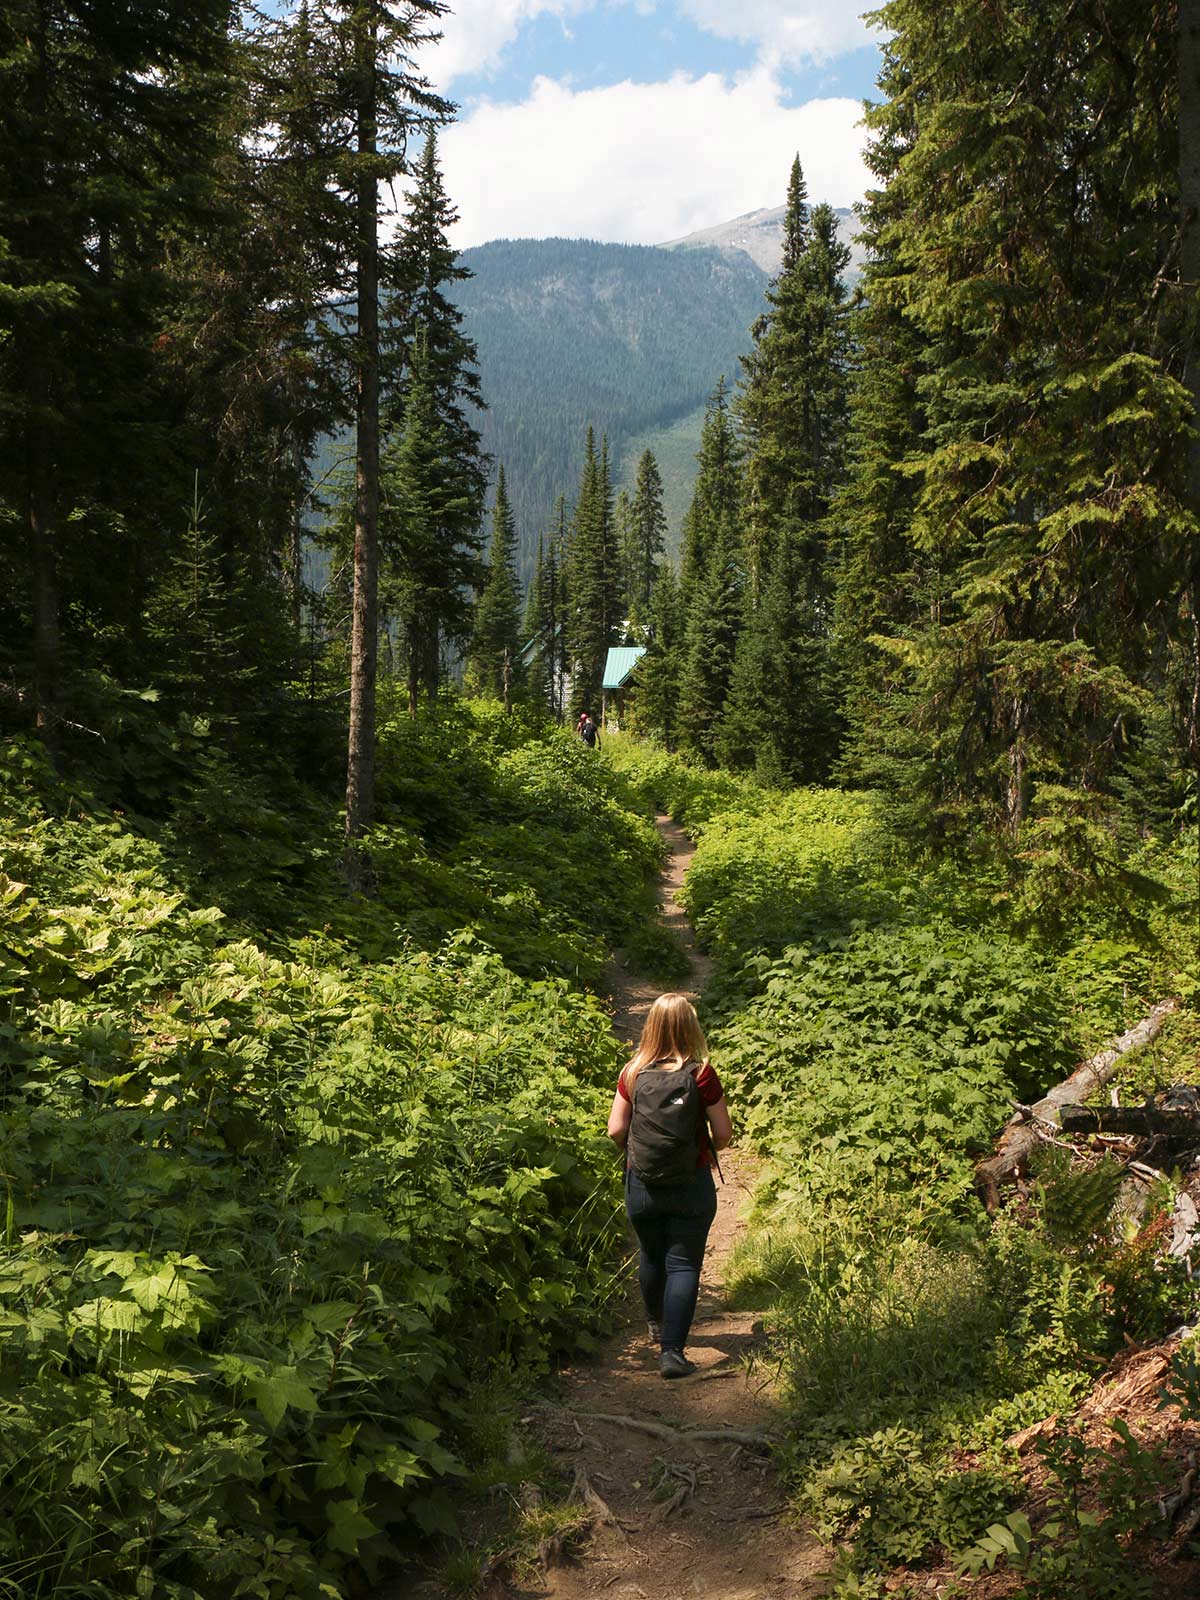 Sentier de randonnée, Lac Émeraude, Parc National Yoho, Rocheuses canadiennes, Canada / Hiking trail, Emerald Lake, Yoho National Park, Canadian Rockies, Canada